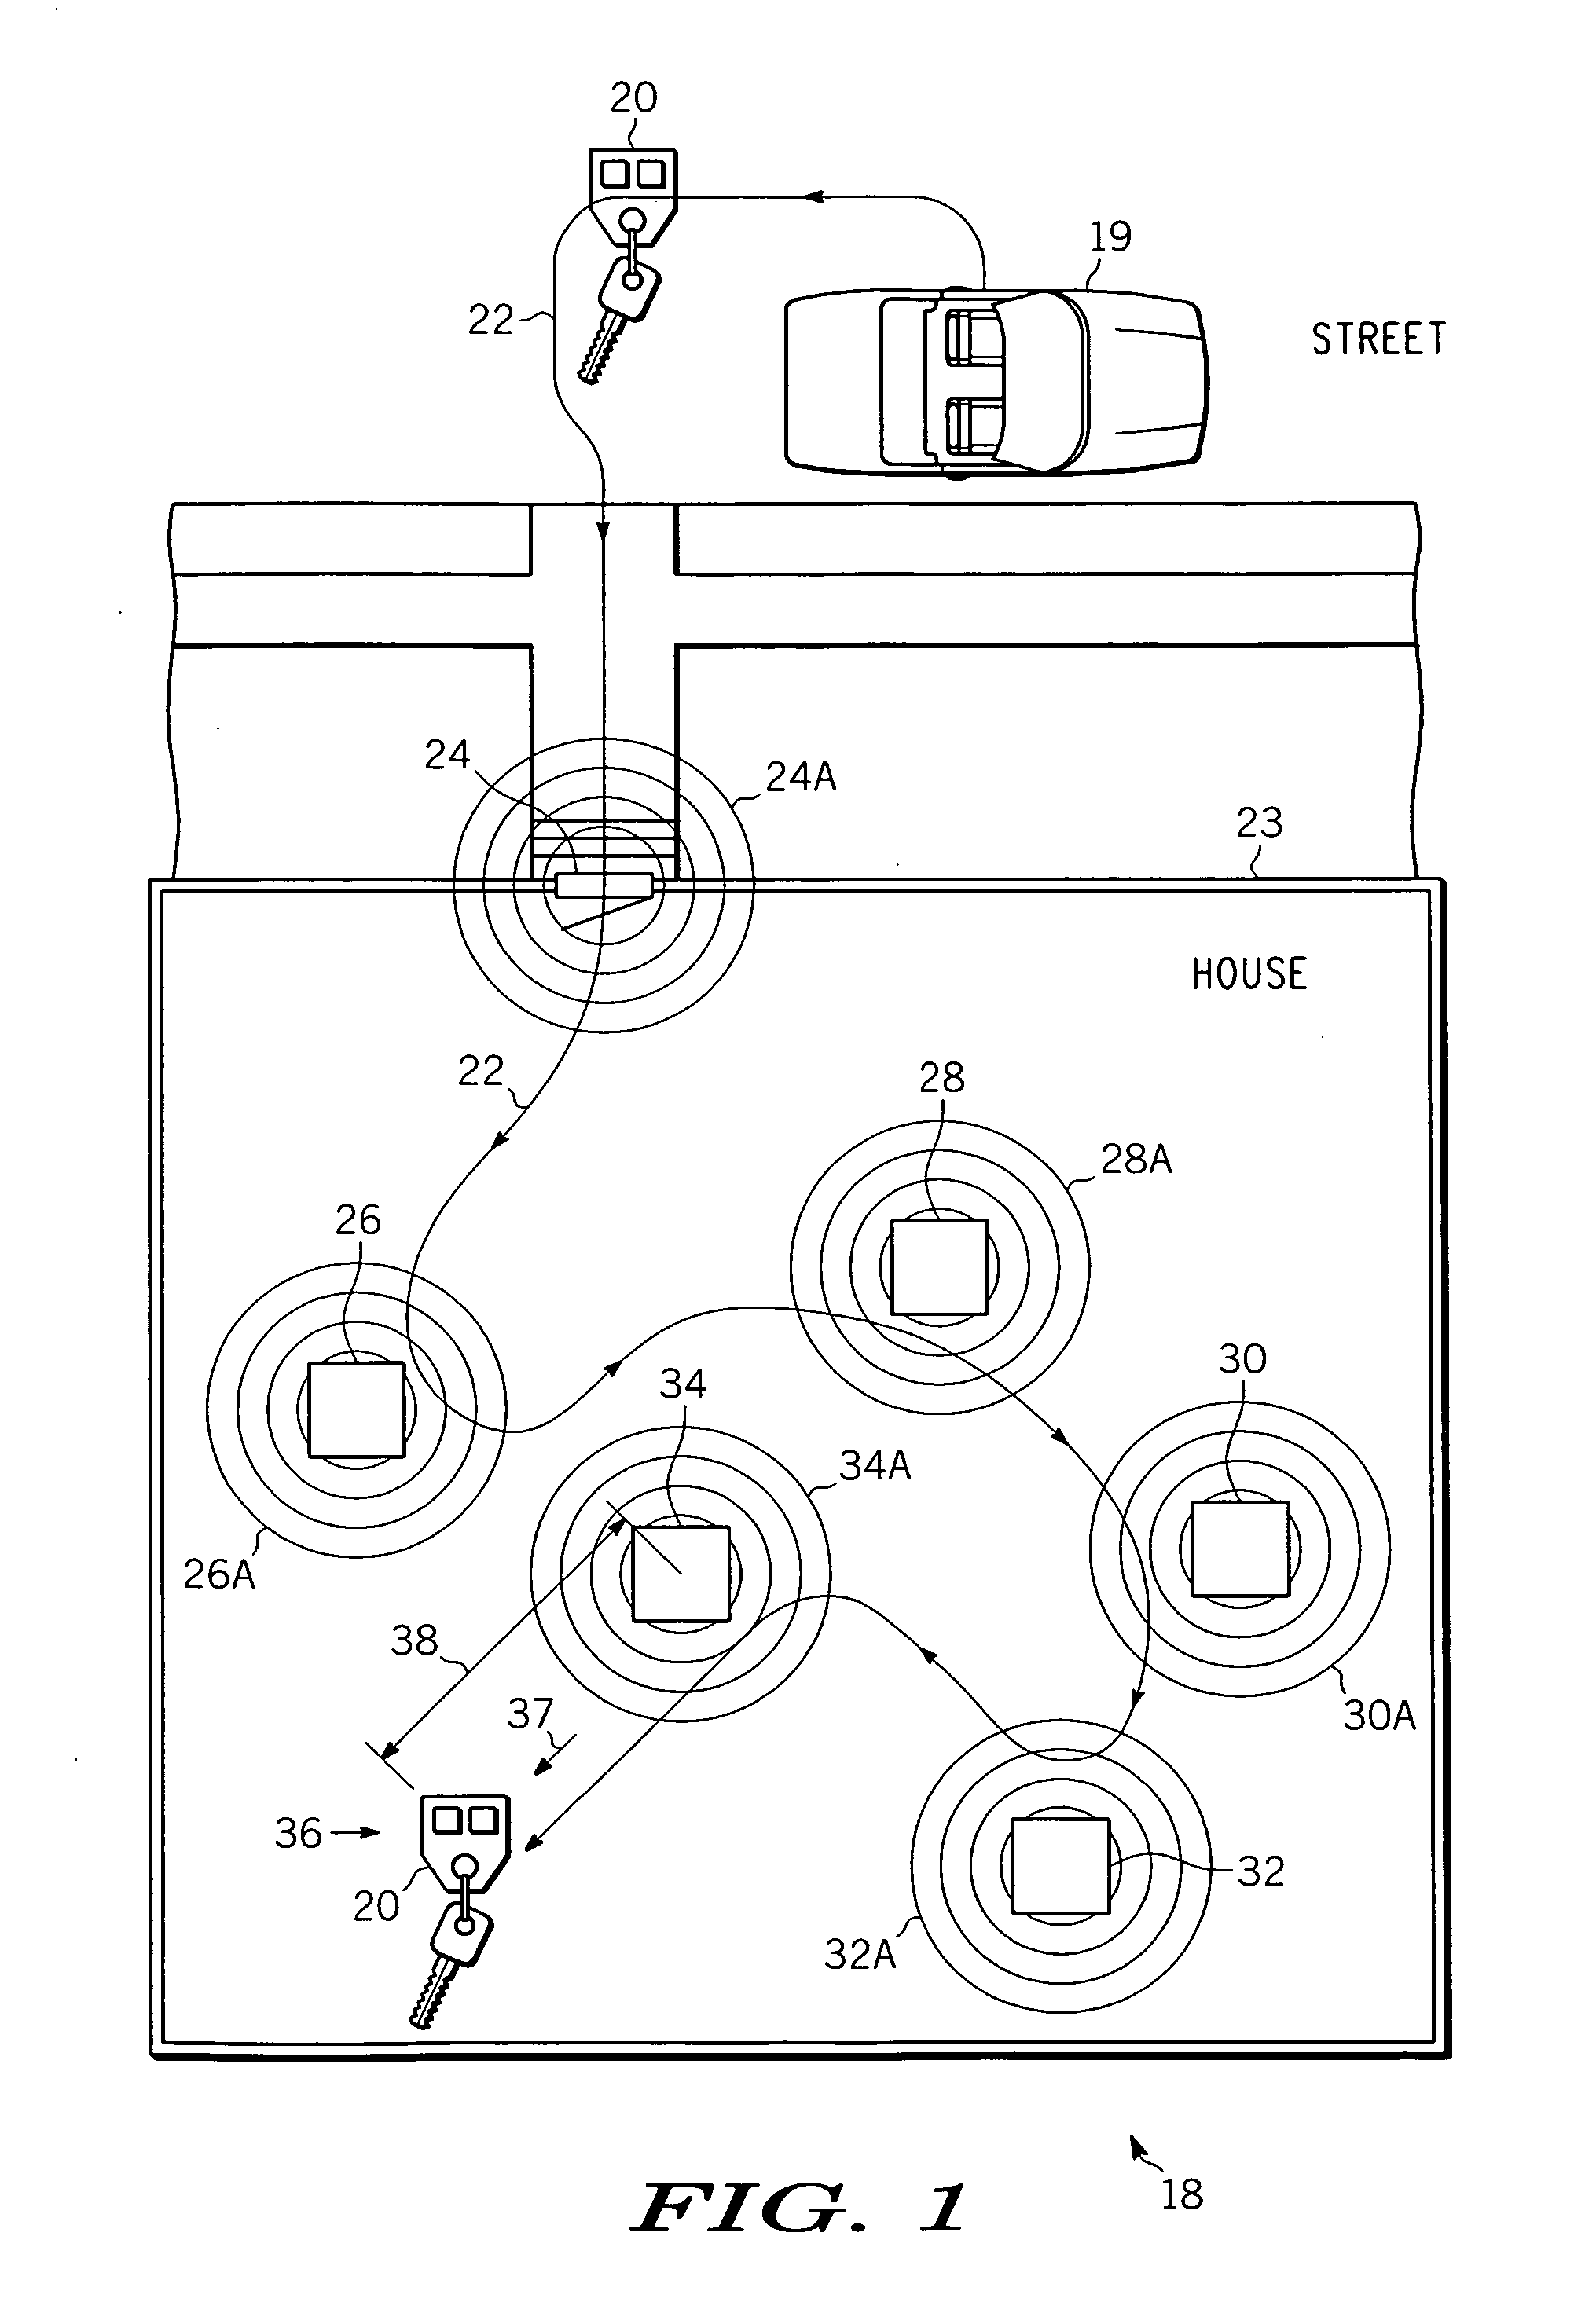 Key-fob locating method and apparatus